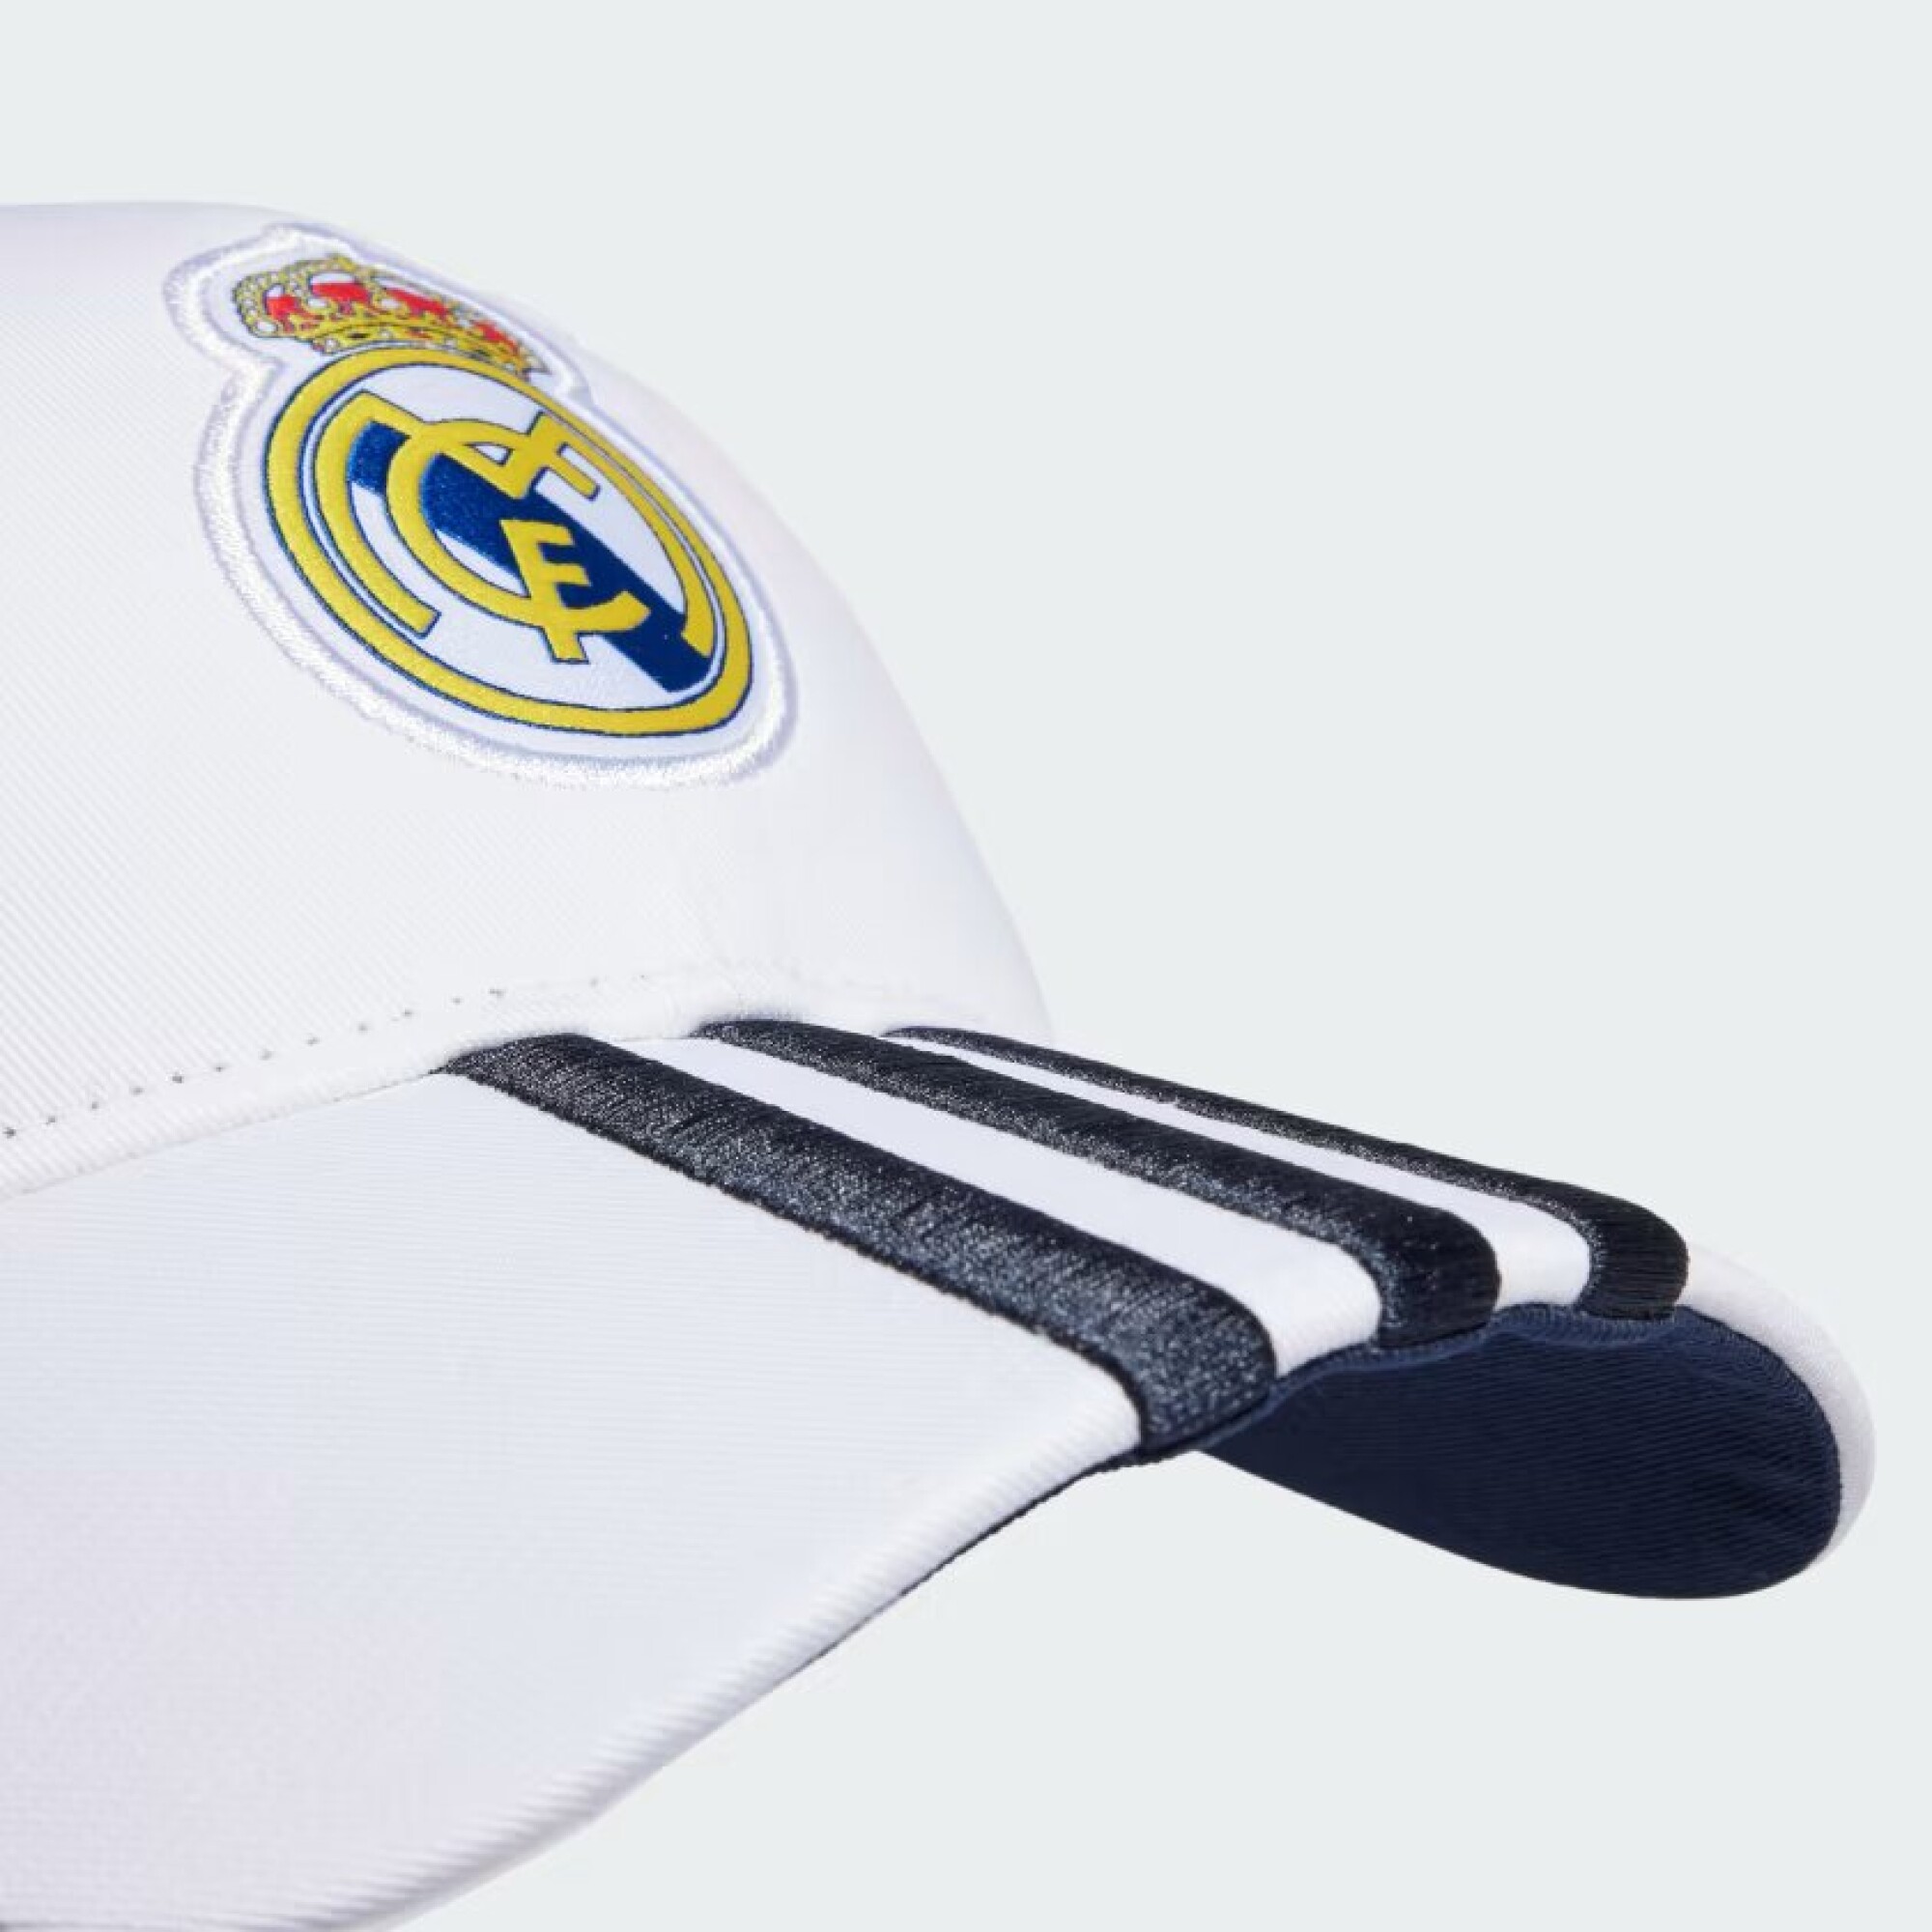 Gorra Real Madrid (UNISEX) - Blanco adidas